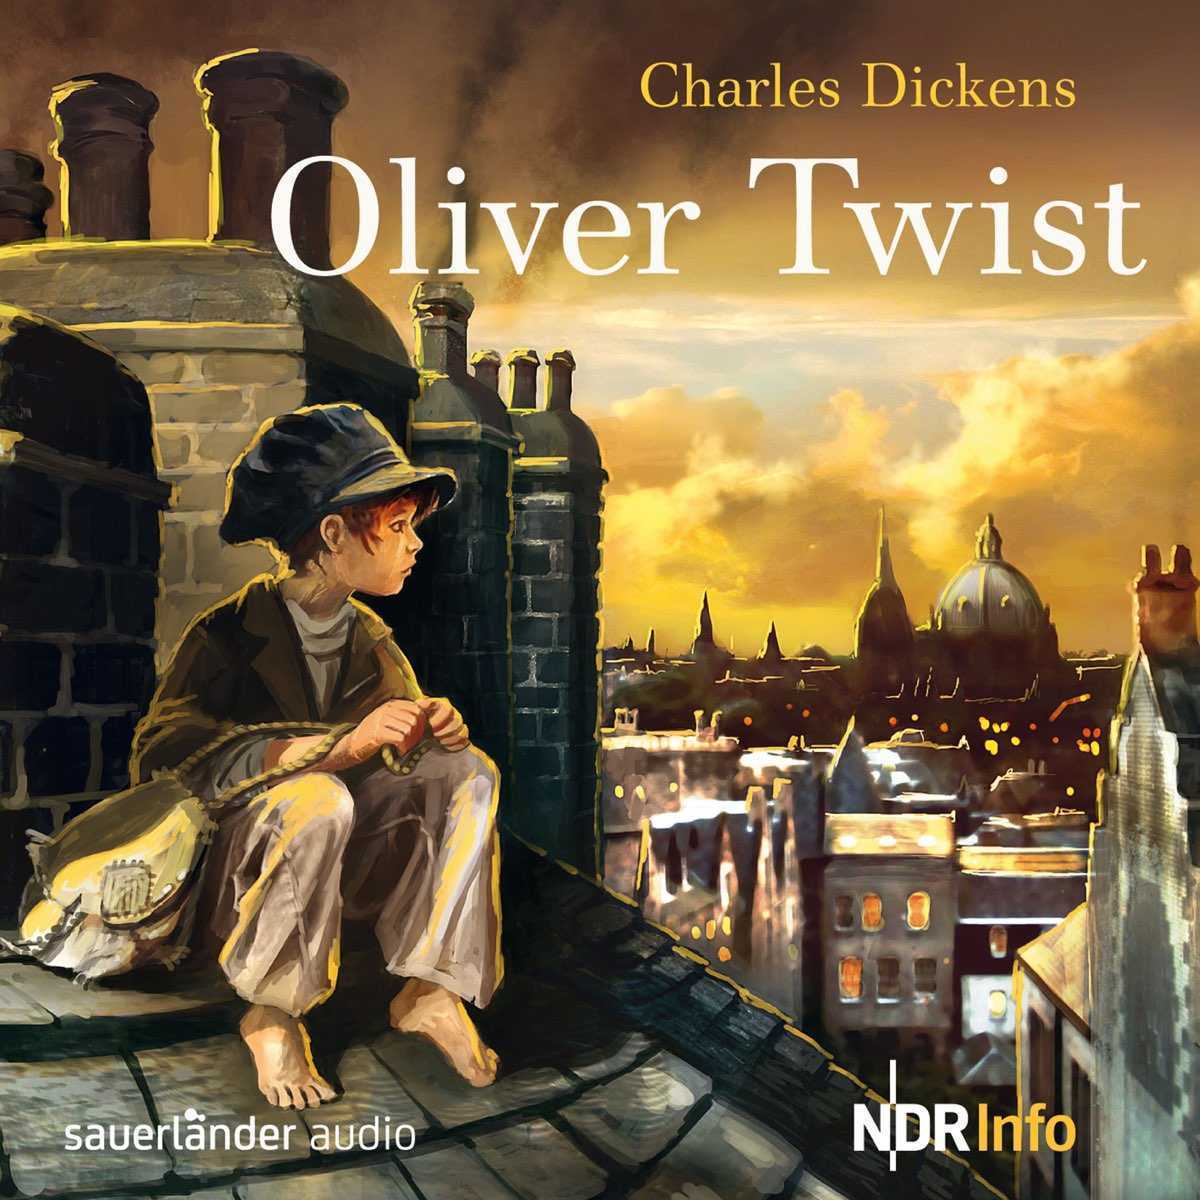 Приключения оливера твиста кратчайшее содержание. Dickens Charles "Oliver Twist". Charles Dickens Oliver Twist book. Приключения Оливера Твиста обложка.